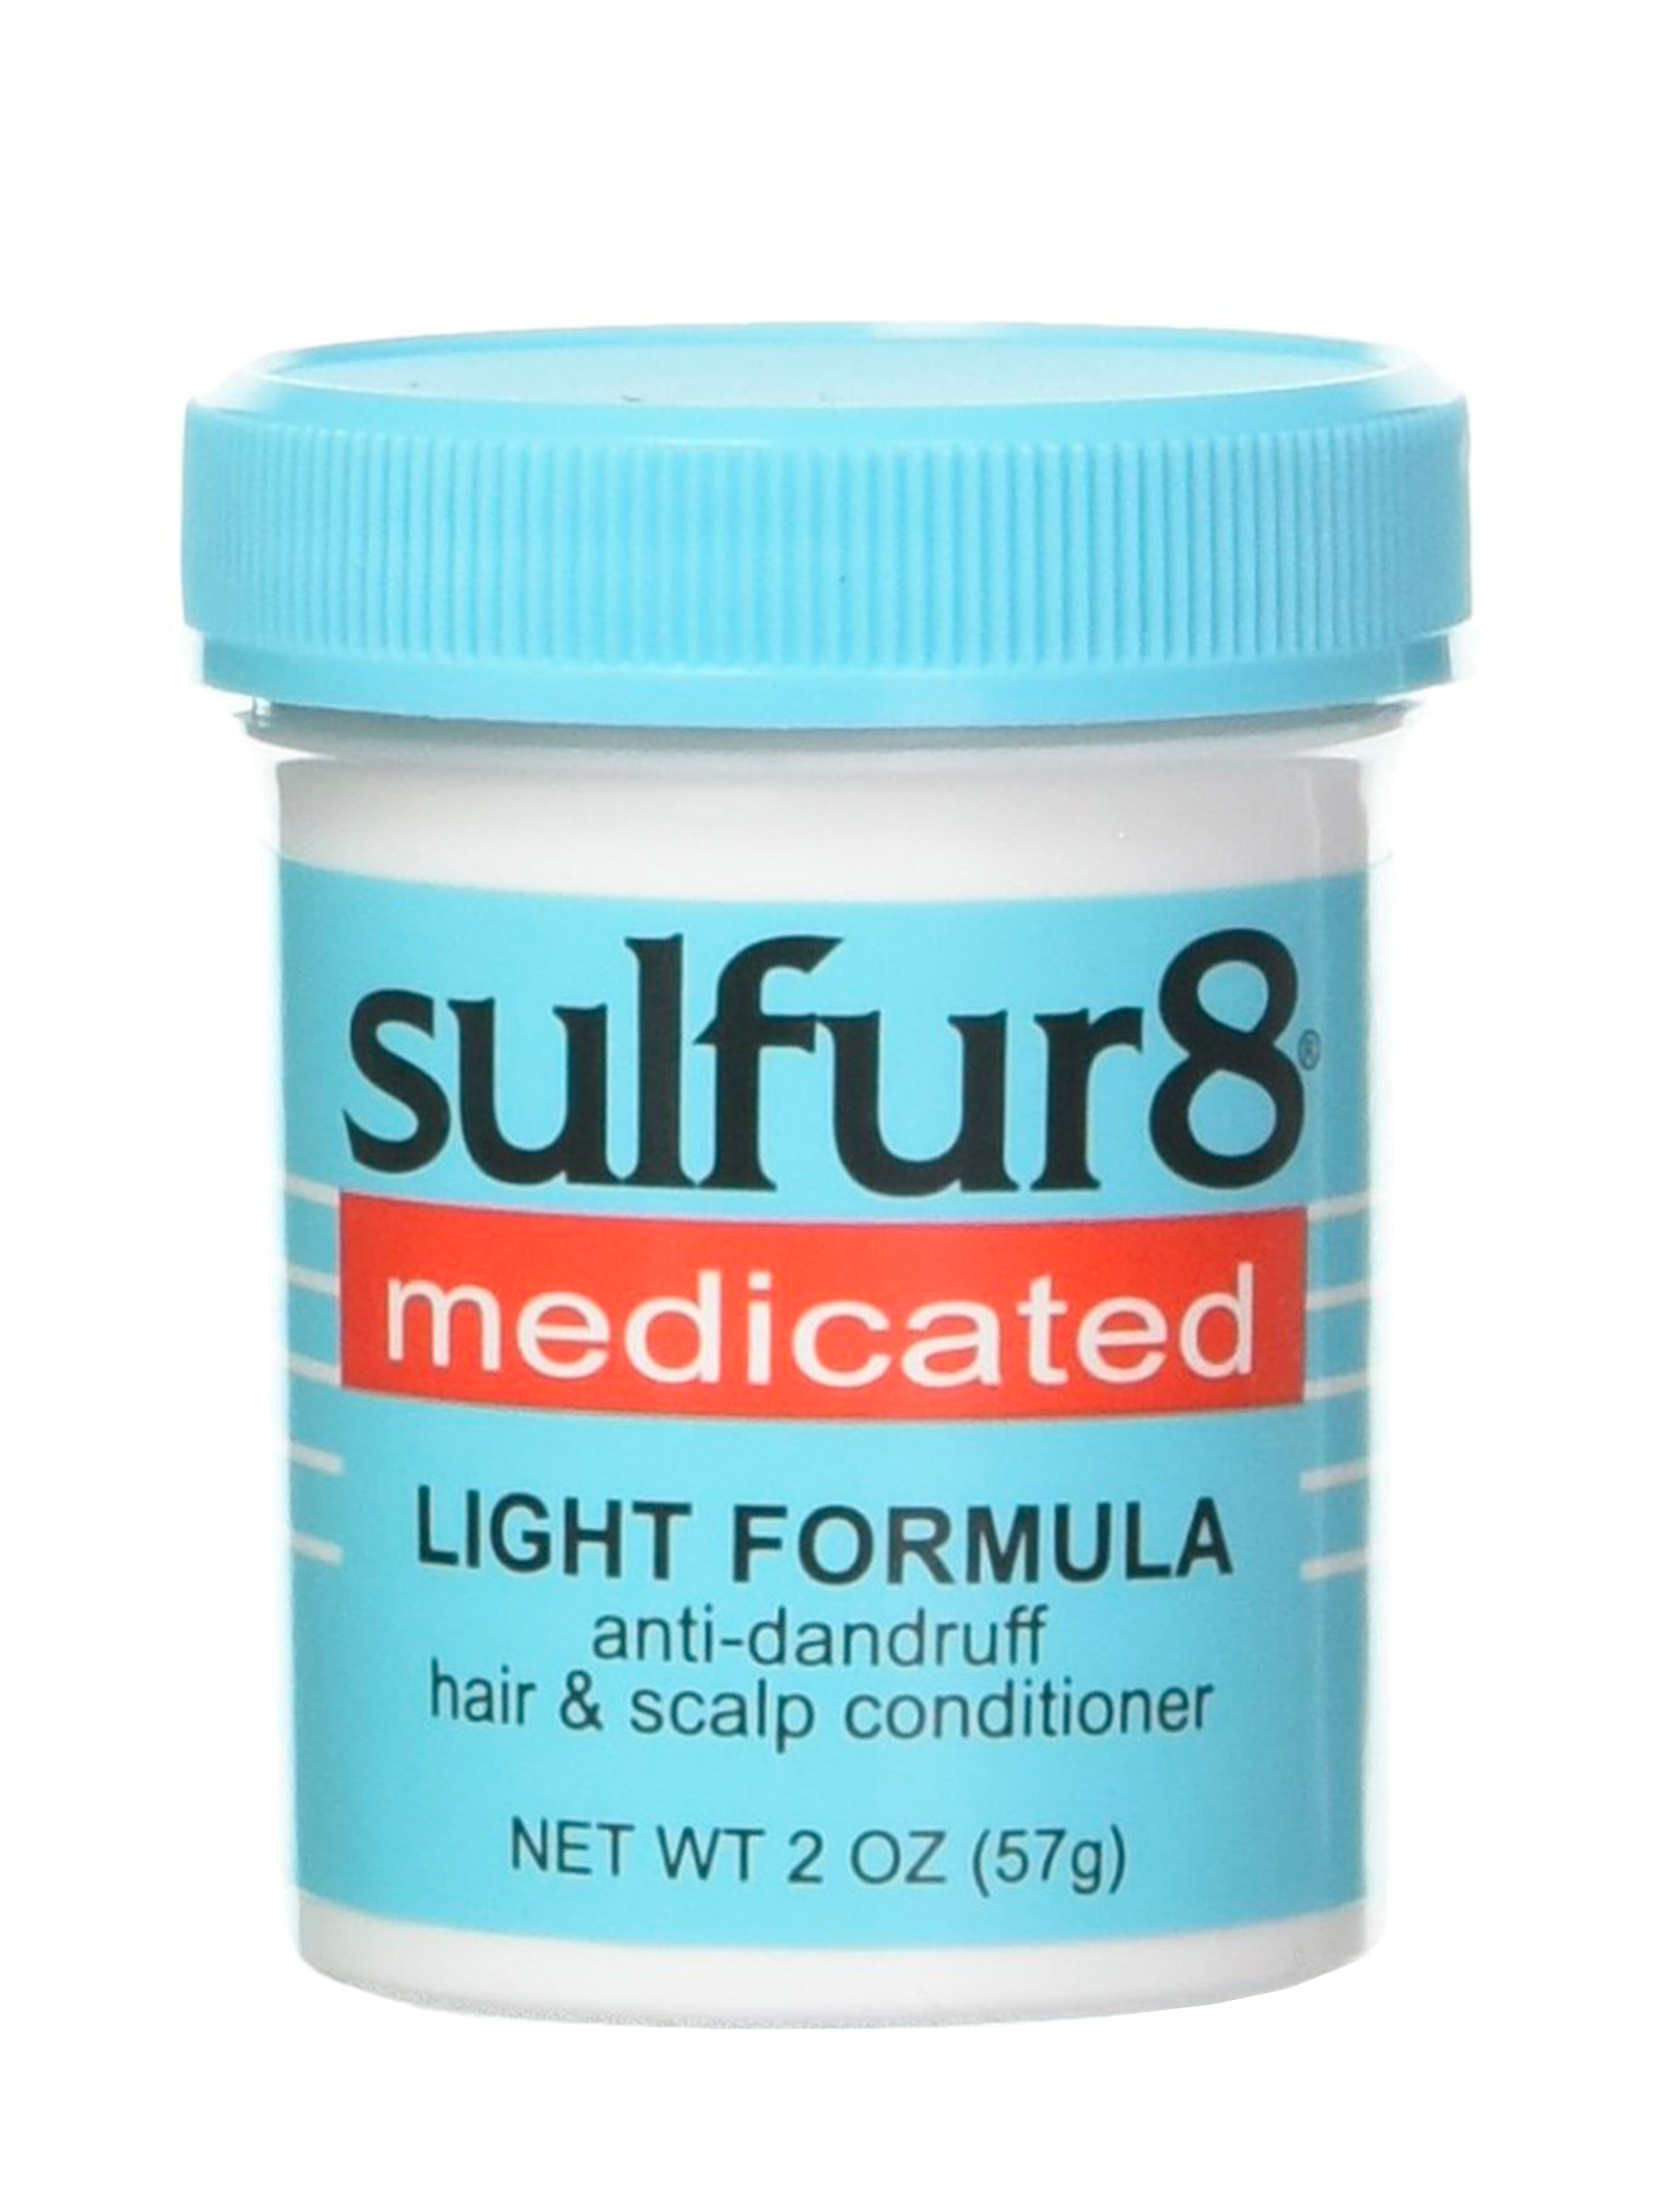 Sulfur 8 Medicated Light Formula Anti-Dandruff Hair & Scalp Conditioner 7.25oz